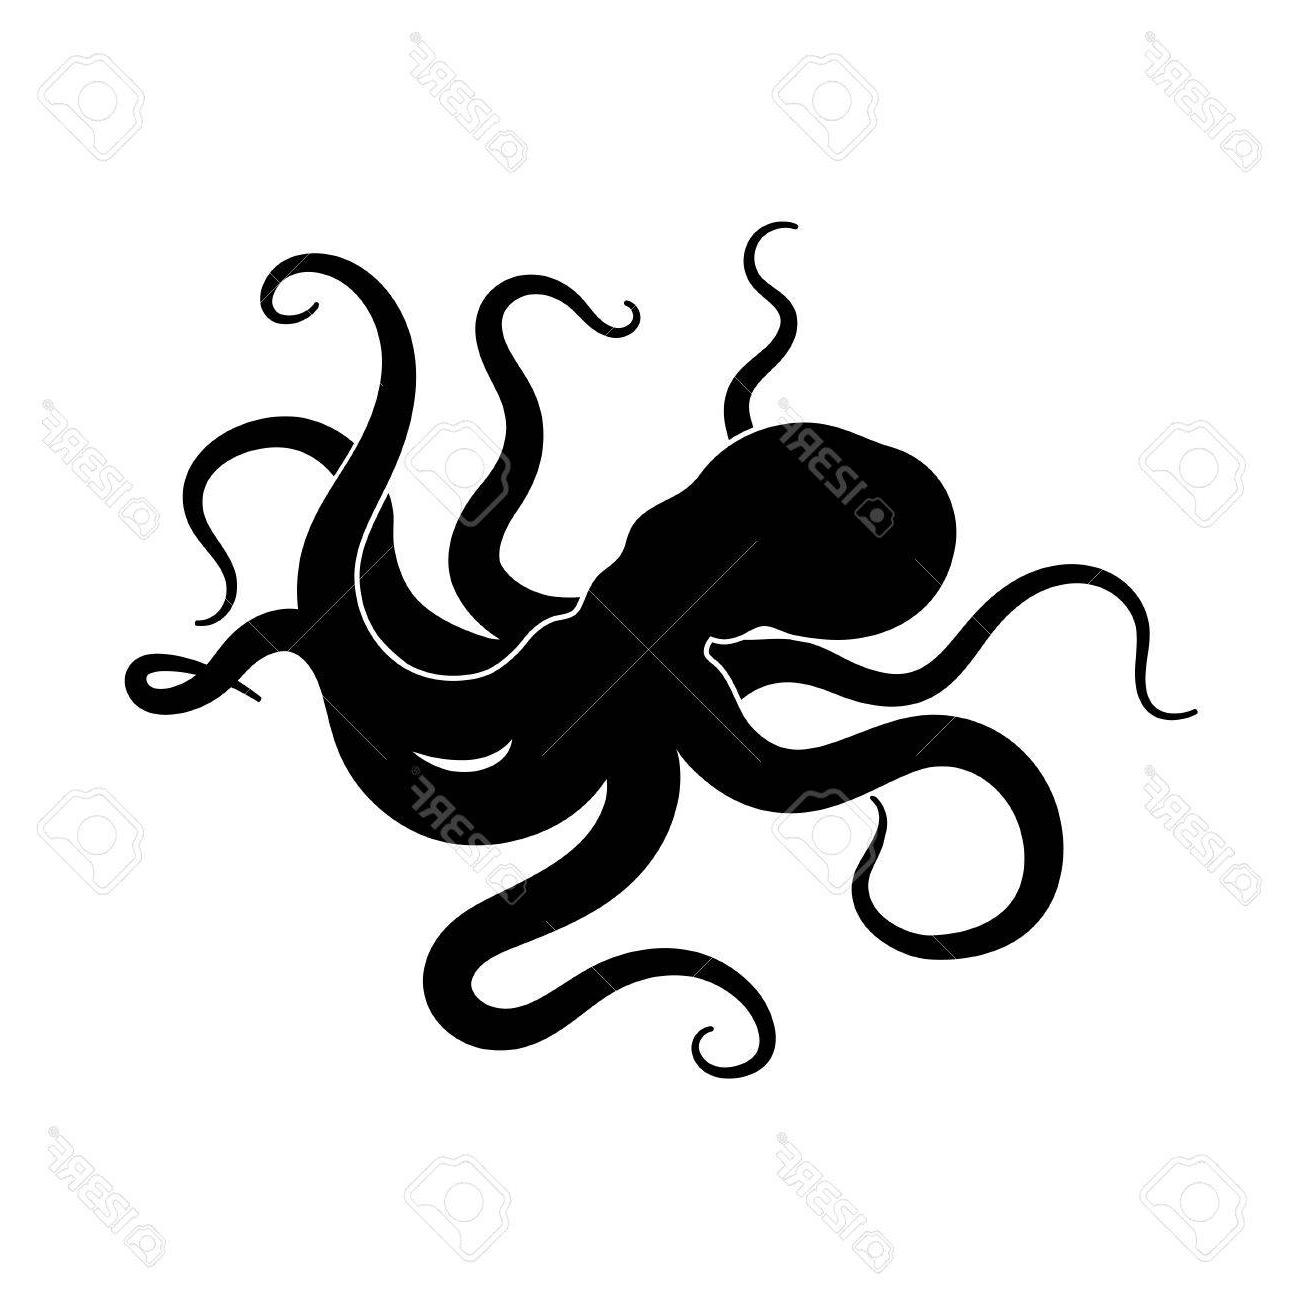 Top octopus silhouette.